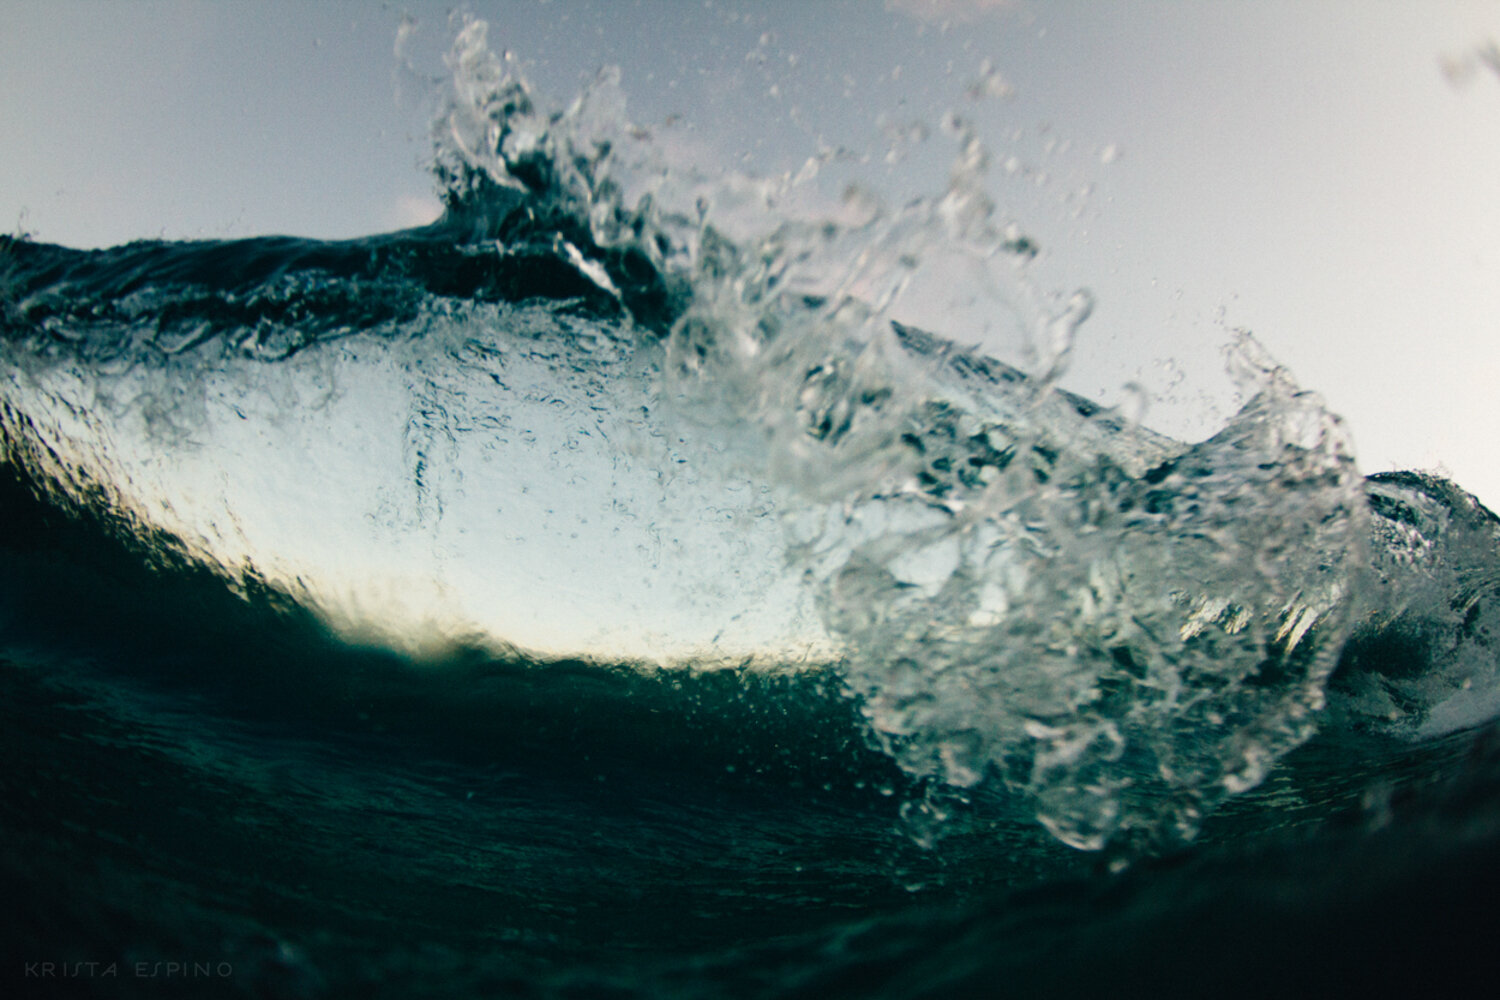 bodysurf waves lifestyle nature photography photographer krista espino travel underwater swim ocean laguna beach_-12.jpg